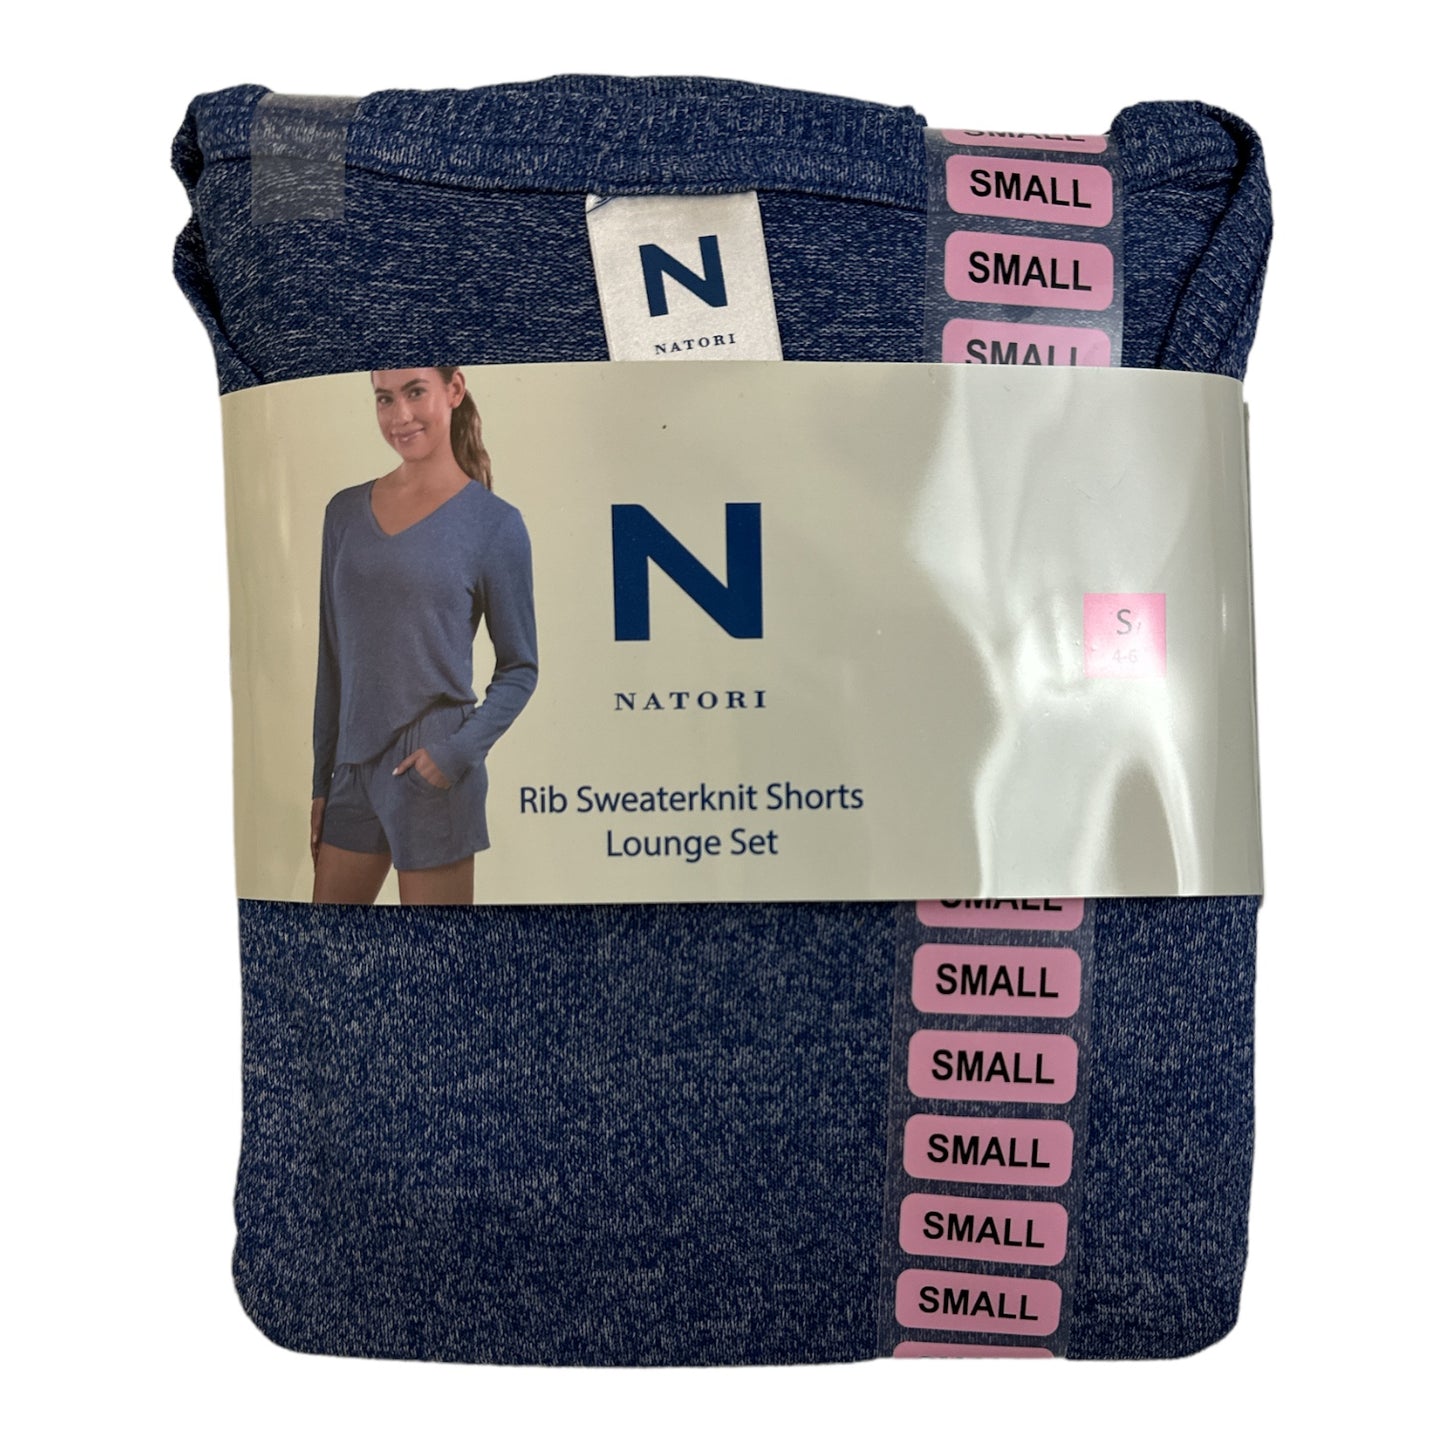 N Natori Women's Long Sleeve V-Neck Top Rib Sweater Knit Shorts  Lounge Set